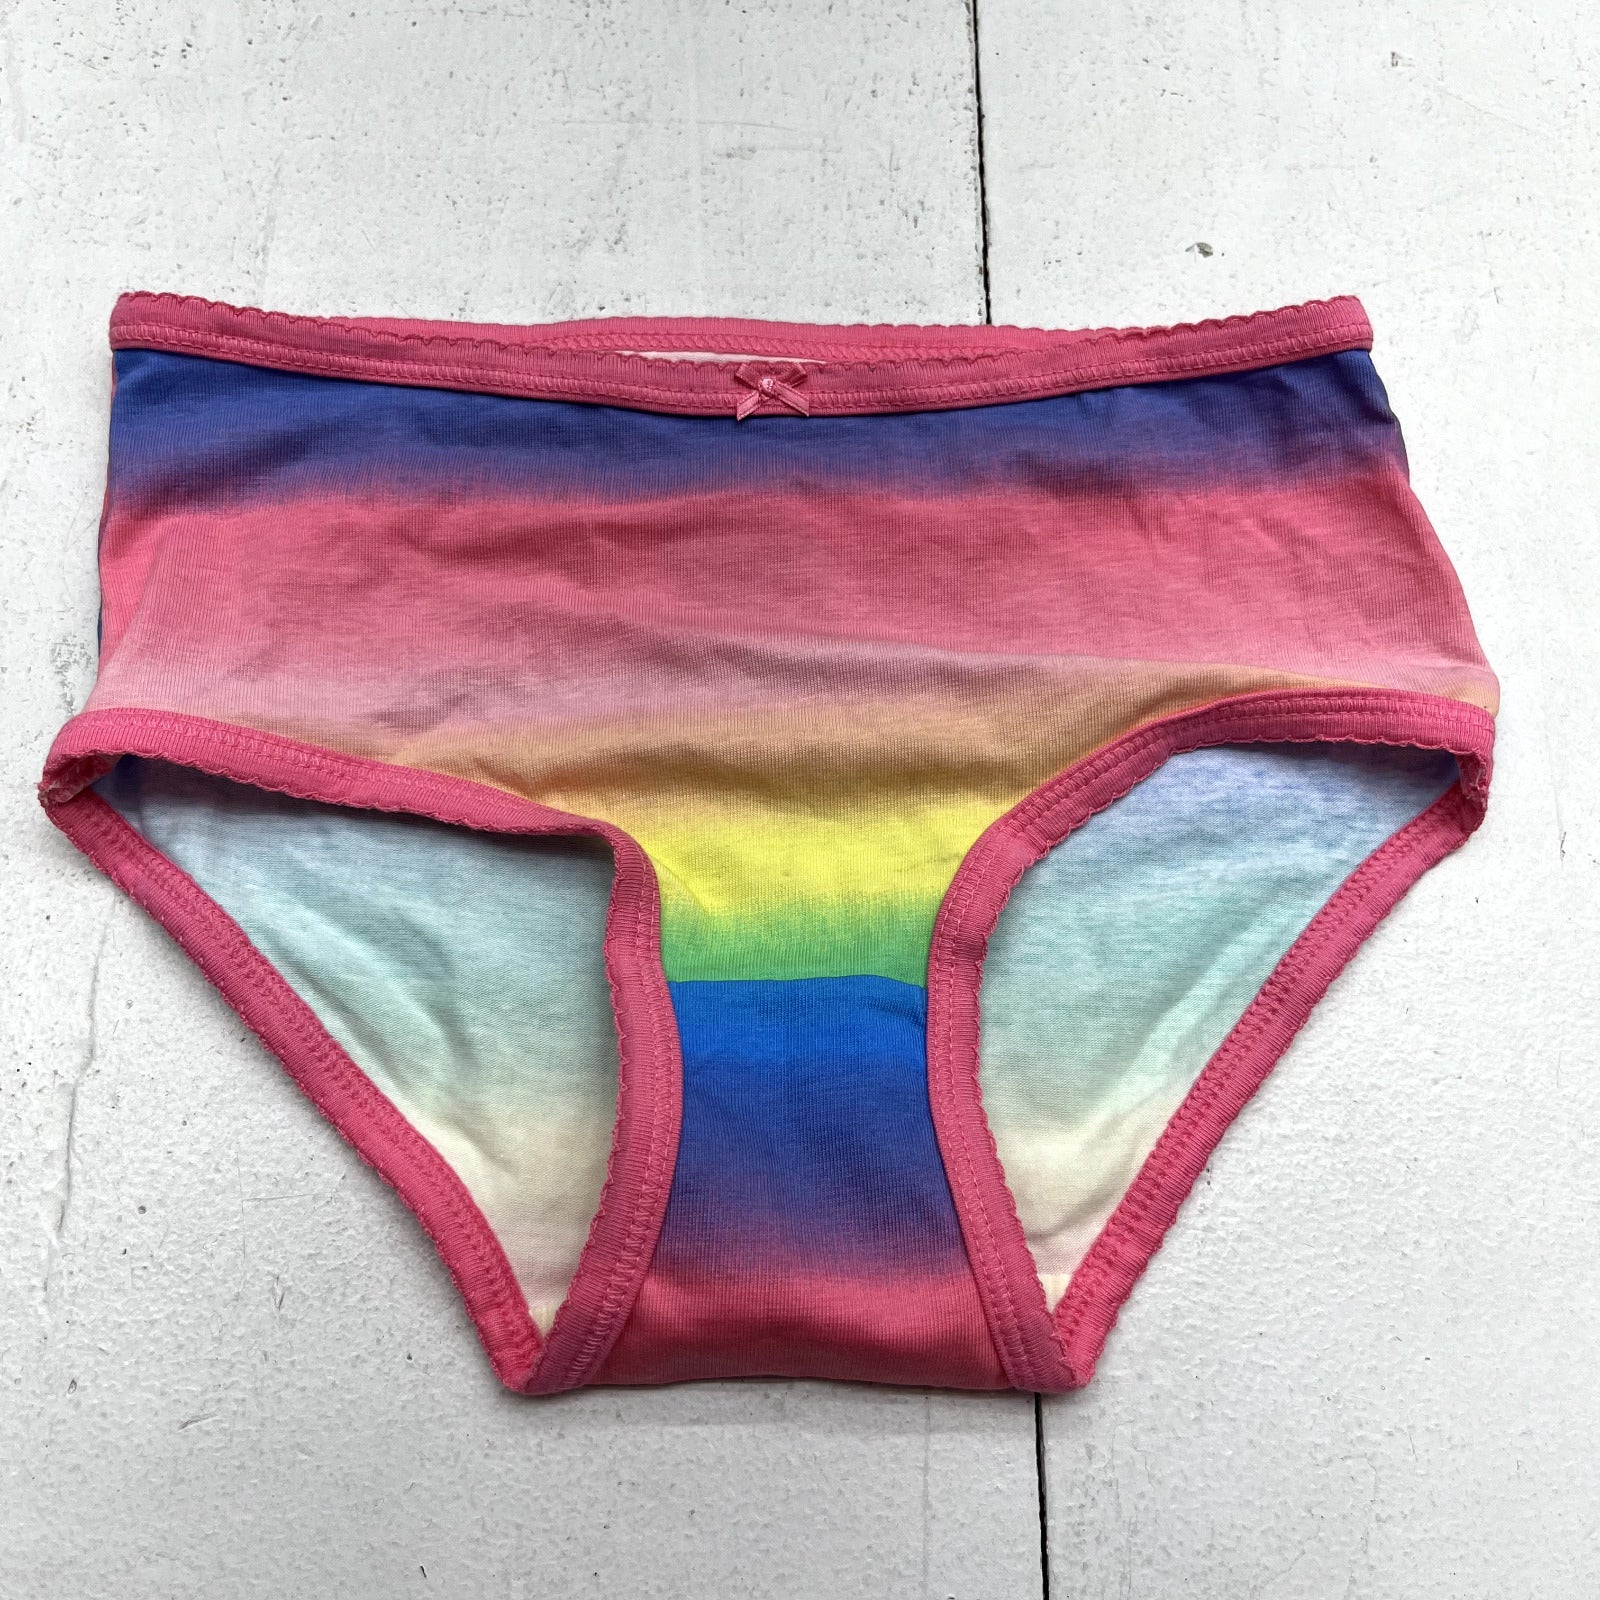 Carters Multicolored Brief Underwear Girls Size 8 NEW